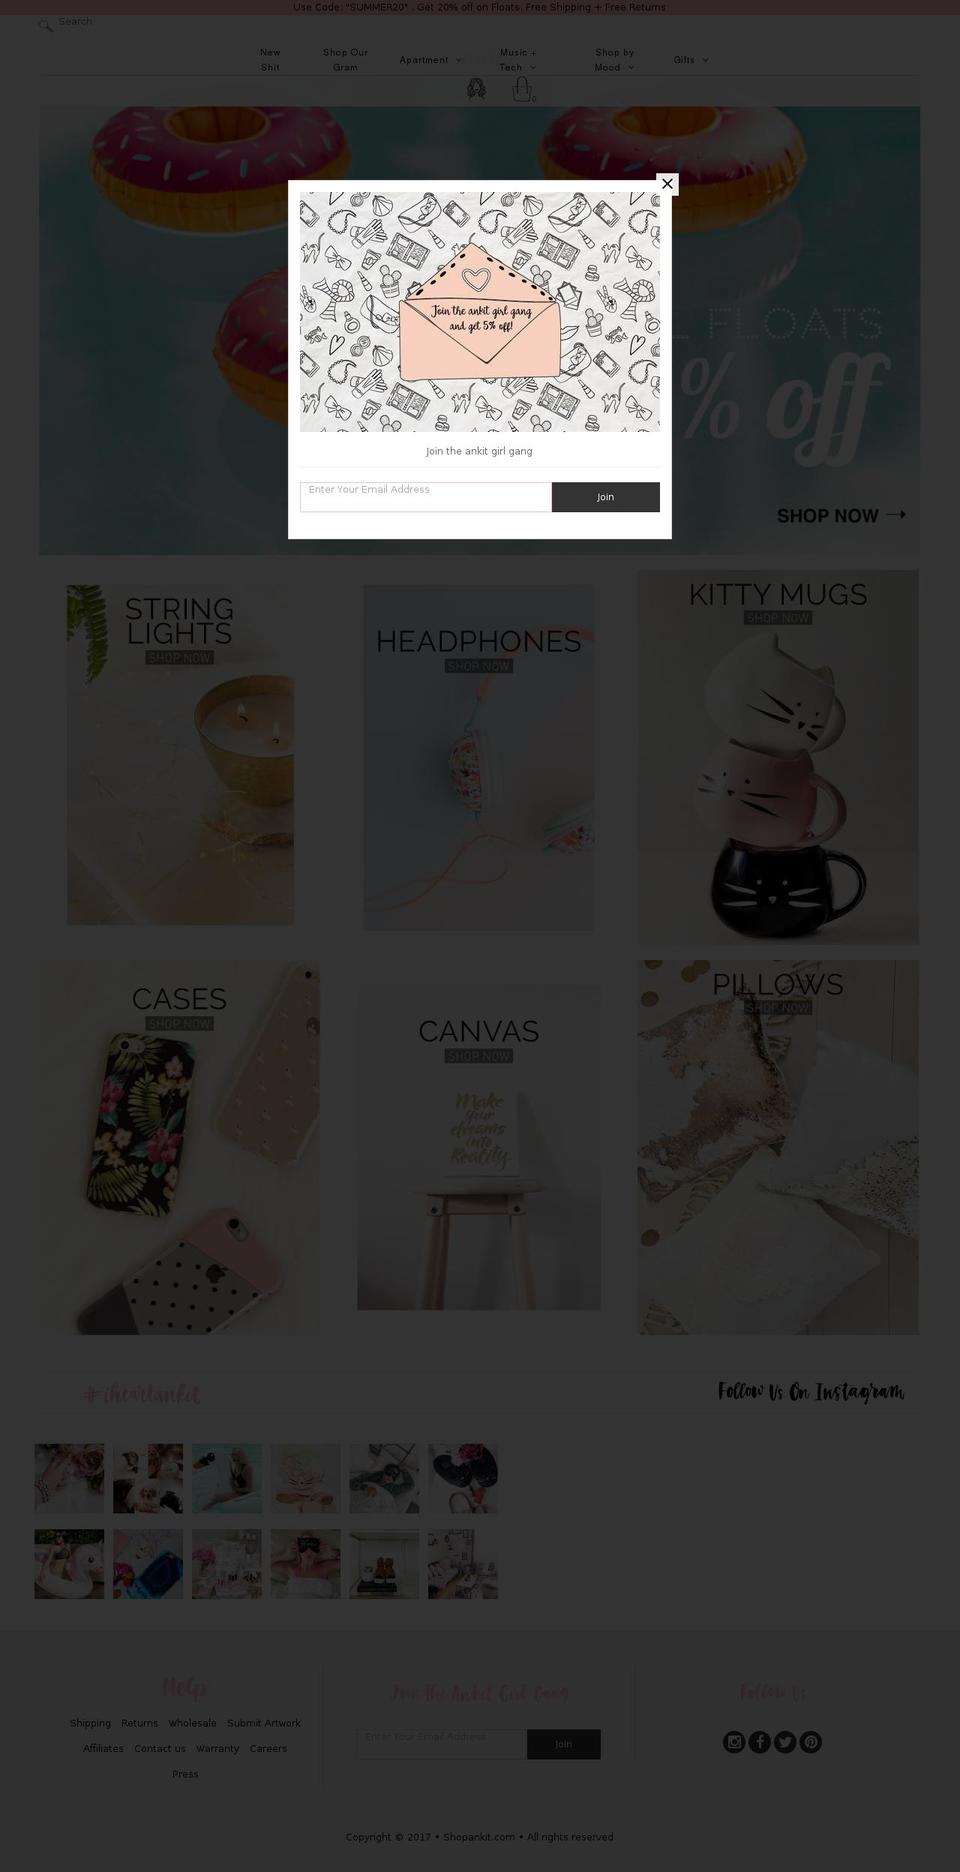 ankit.cn shopify website screenshot